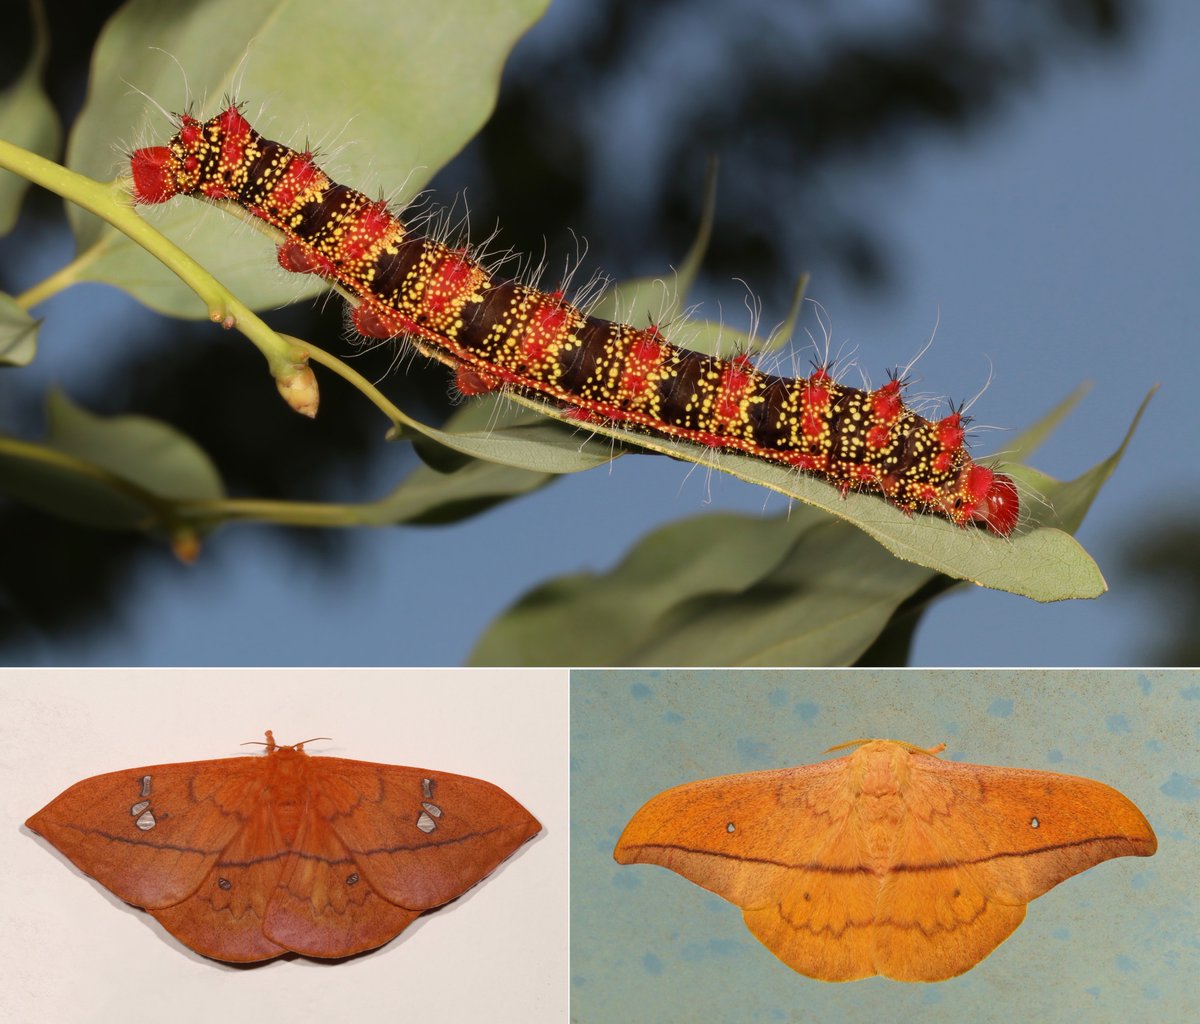  #METAMORPHOSIS - Cricula Silk  #Moth (Cricula trifenestrata, Saturniidae)(female moth on the left, male on the right) https://flic.kr/p/SBdDQ3  #insect  #China  #Yunnan  #Lepidoptera  #entomology